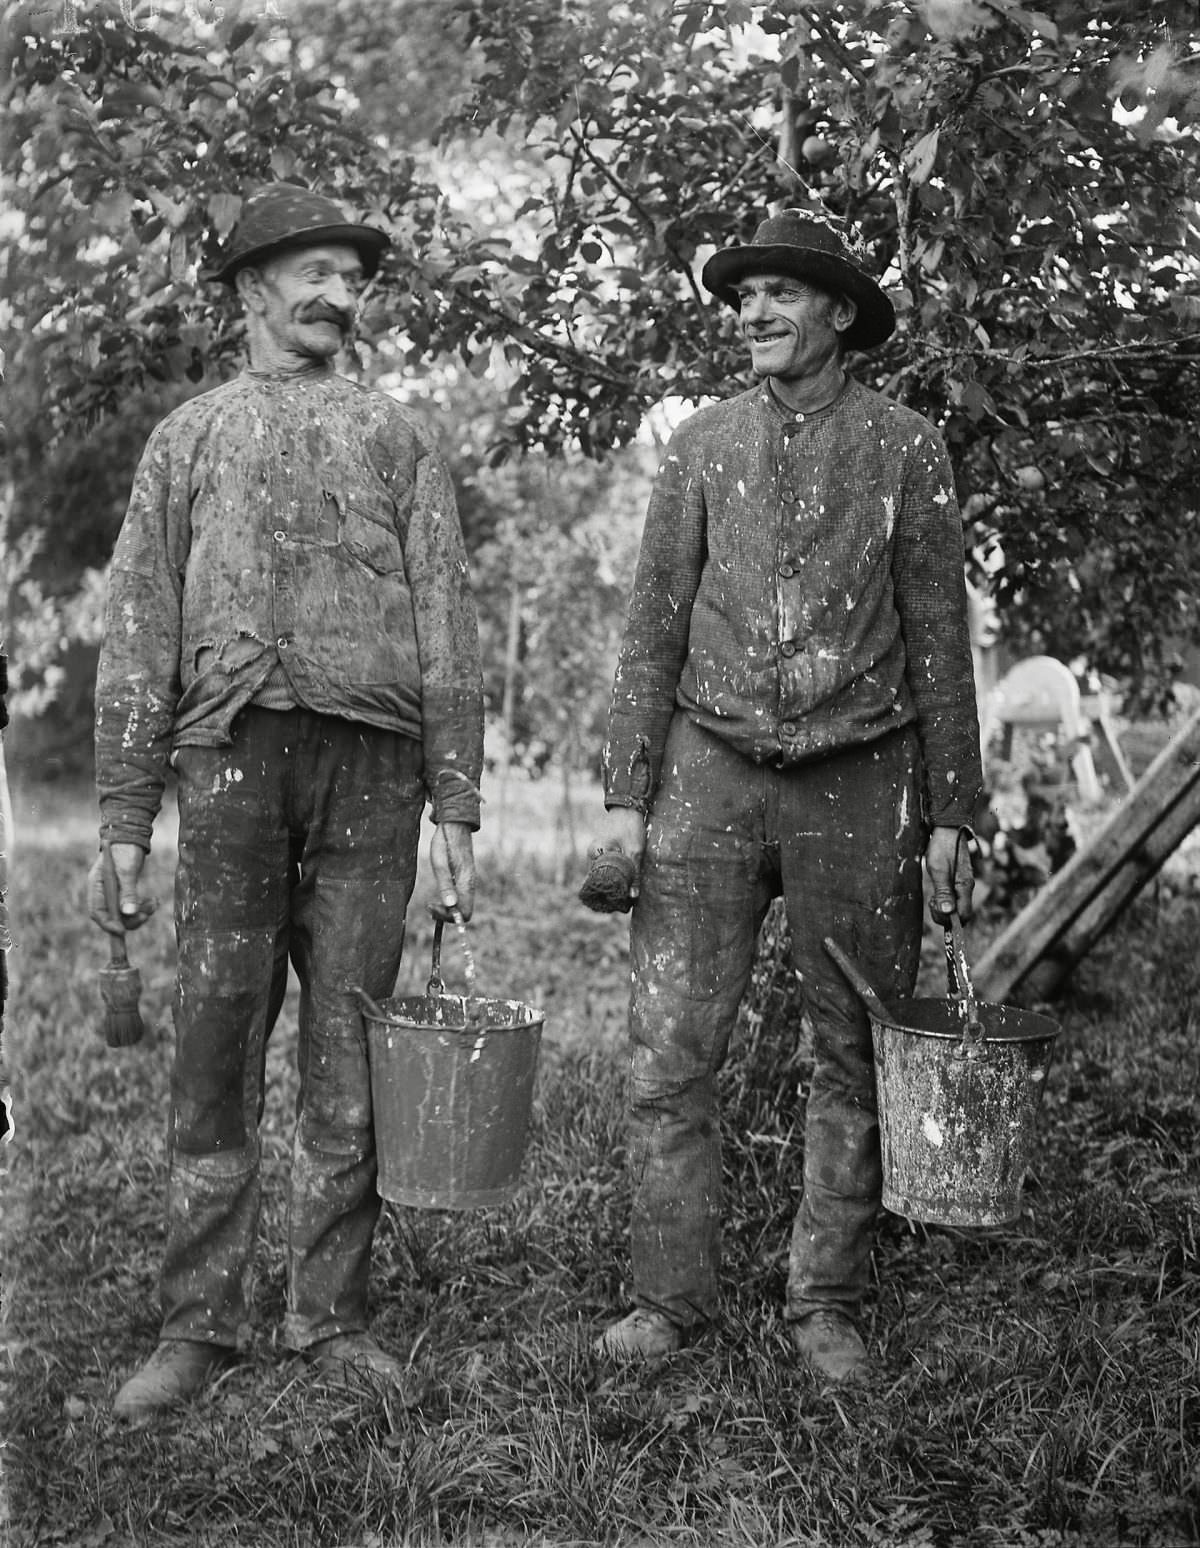 Painters Lindgren and Torell, Sävasta, Altuna parish, 1919